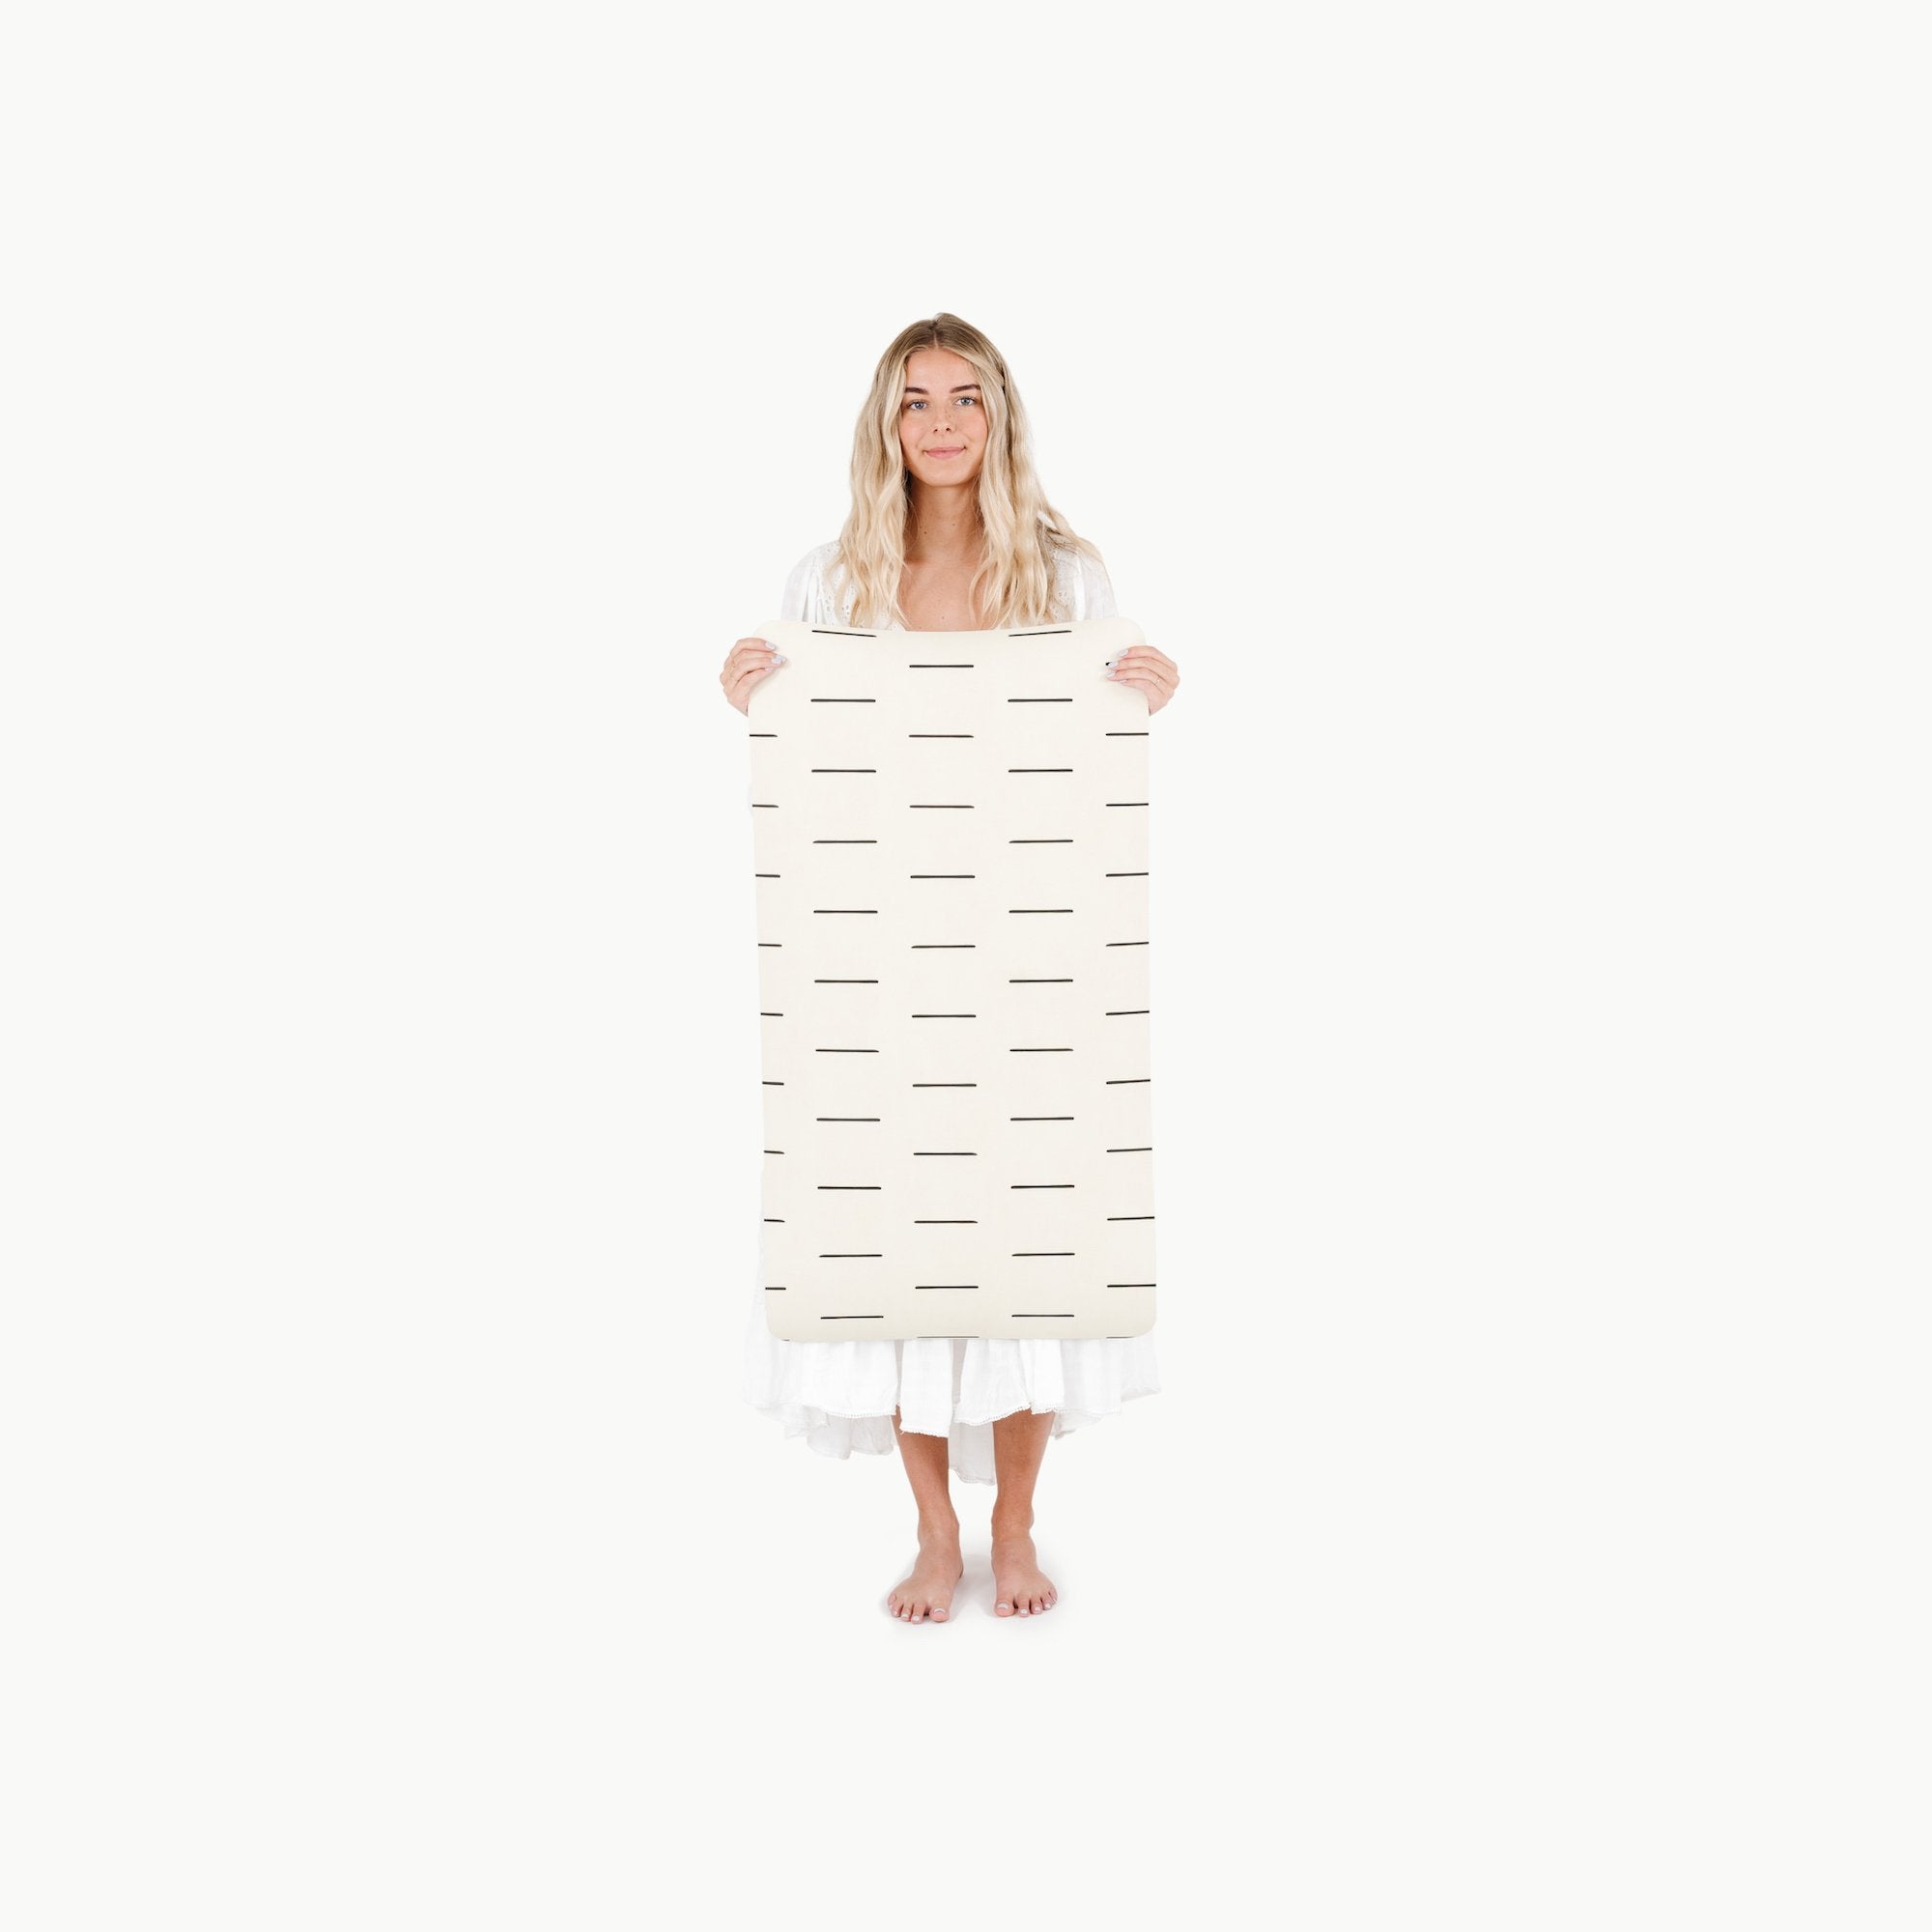 Blanc Dash (on sale)@Woman holding the small blanc dash home mat